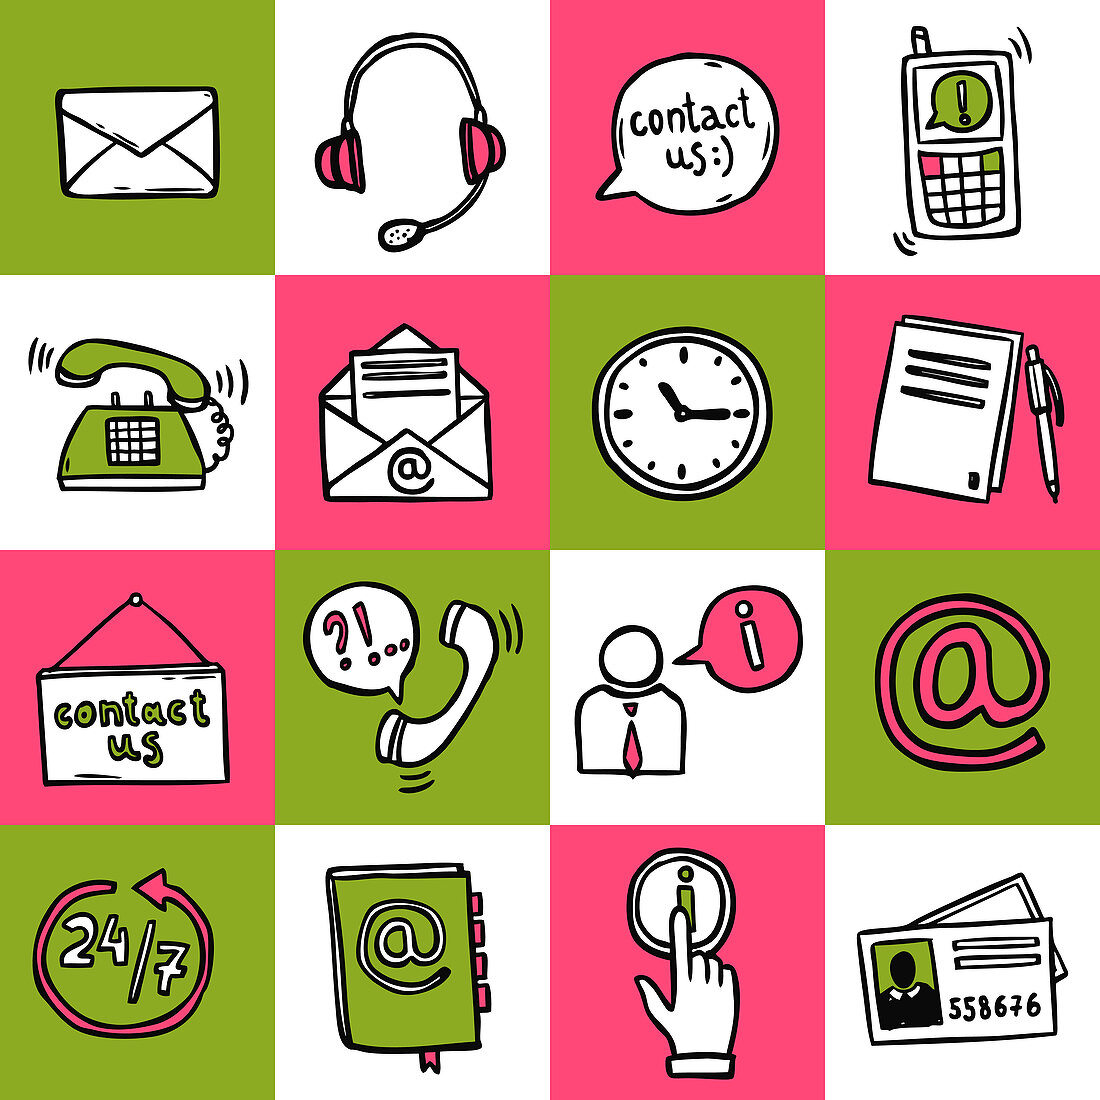 Customer service icons, illustration